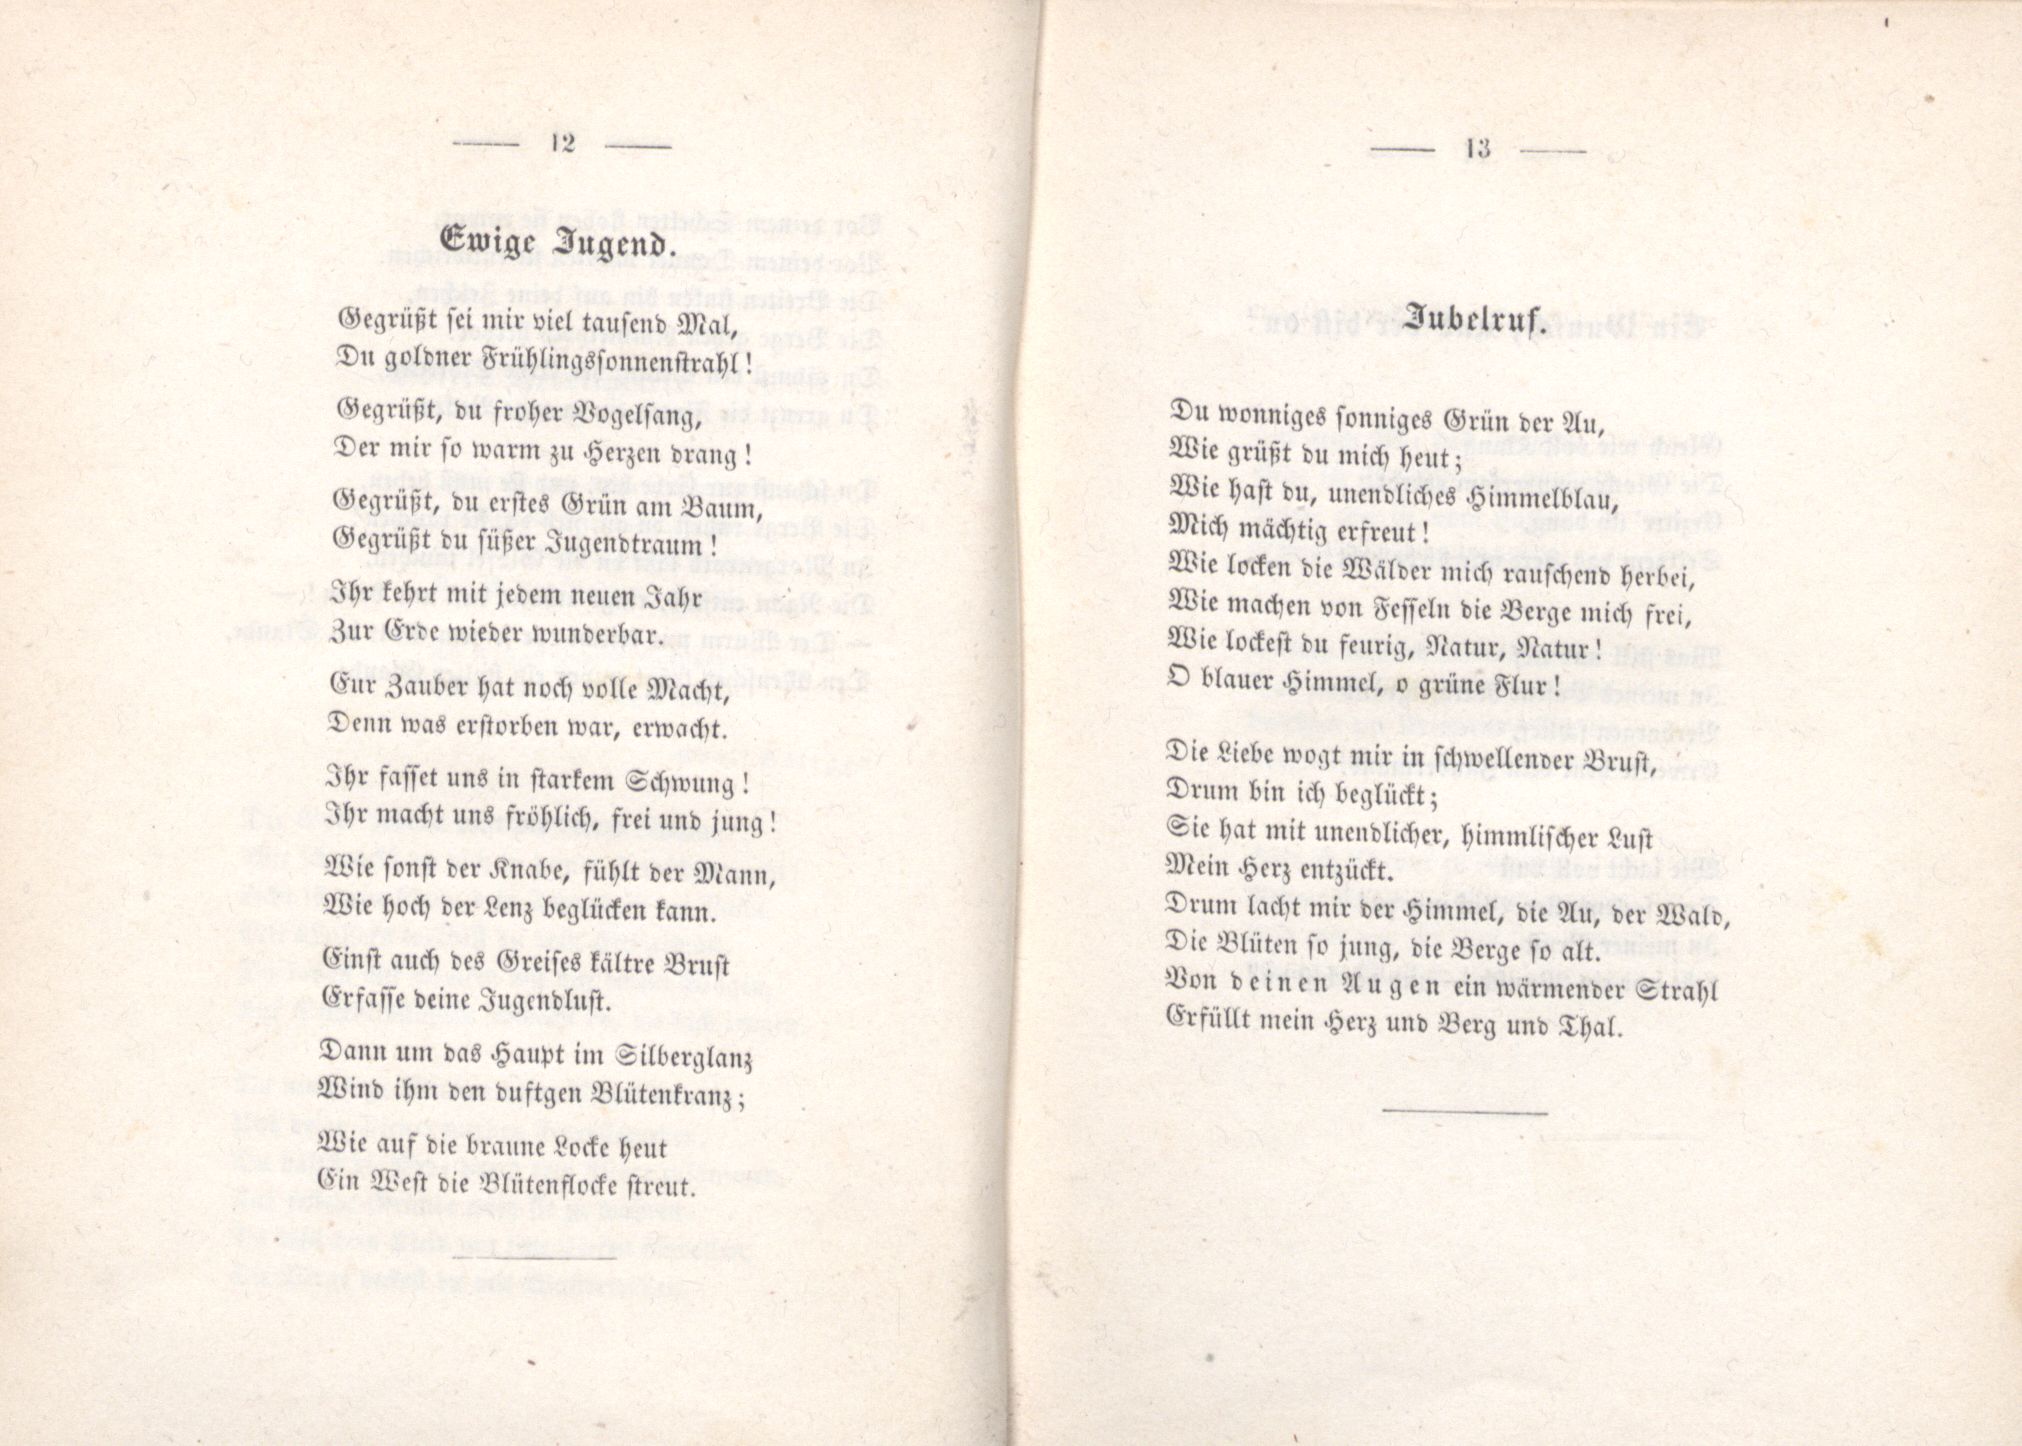 Jubelruf (1853) | 1. (12-13) Main body of text